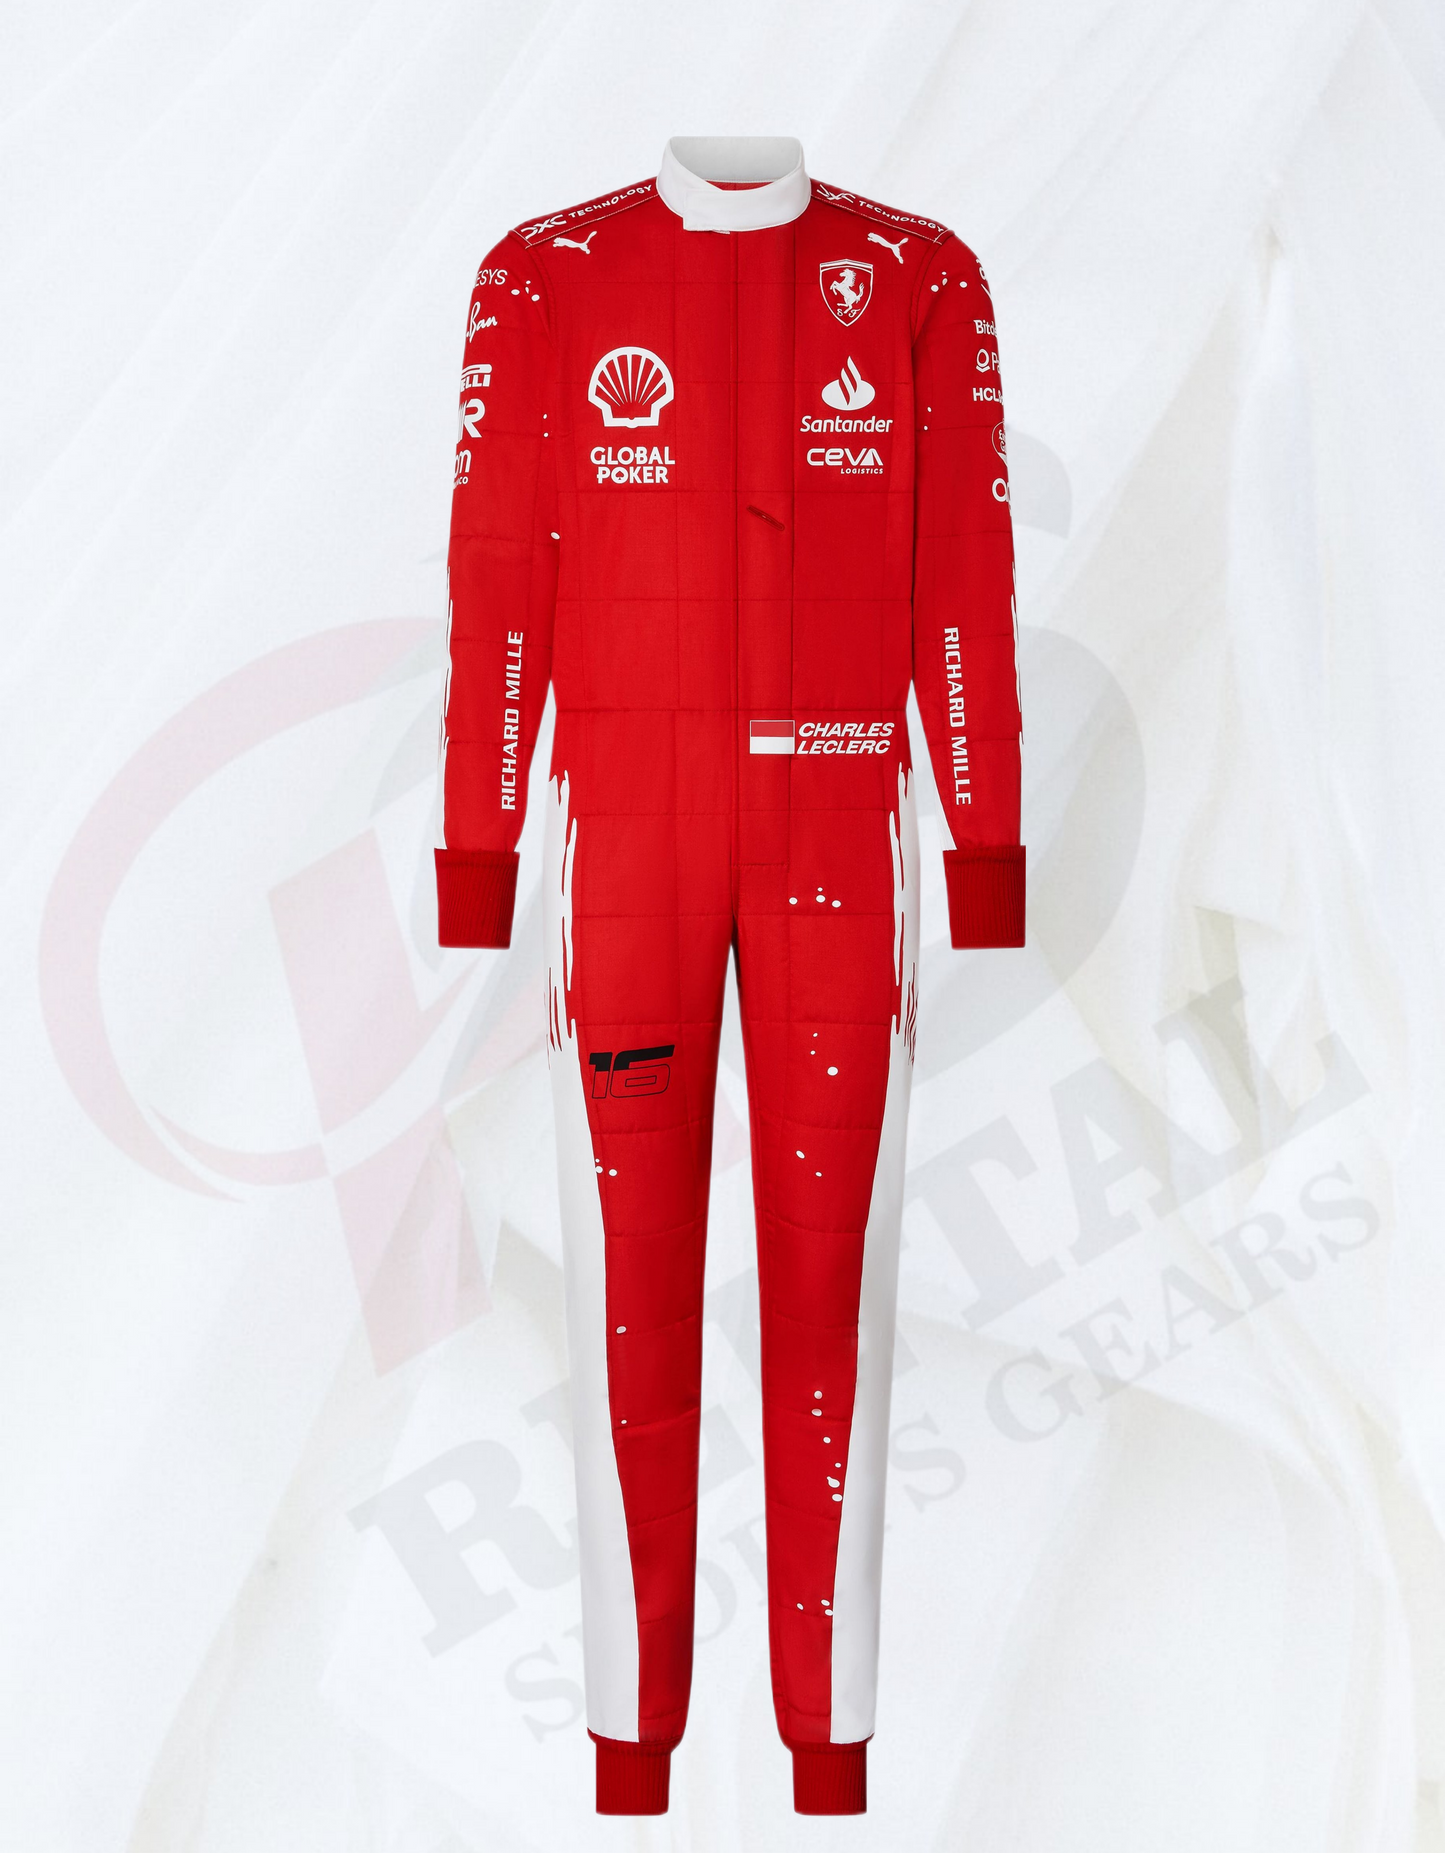 Copy of 2016 Daniel Ricciardo Red Bull Racing Formula One Suit